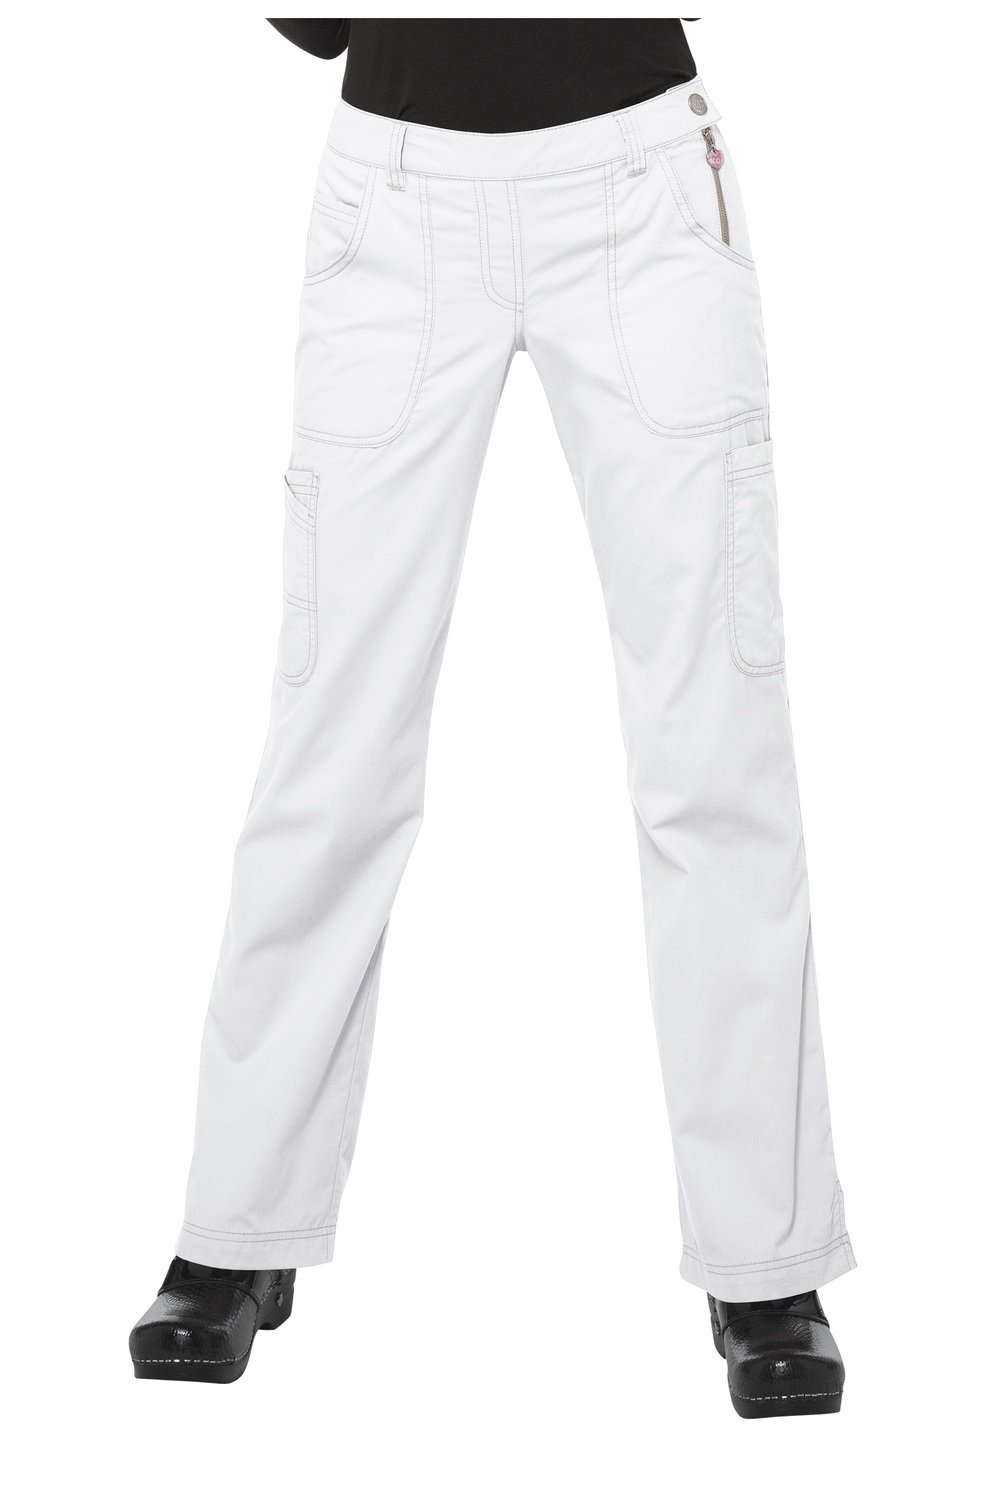 Pantalone KOI CLASSICS SARA Donna Colore 01. White